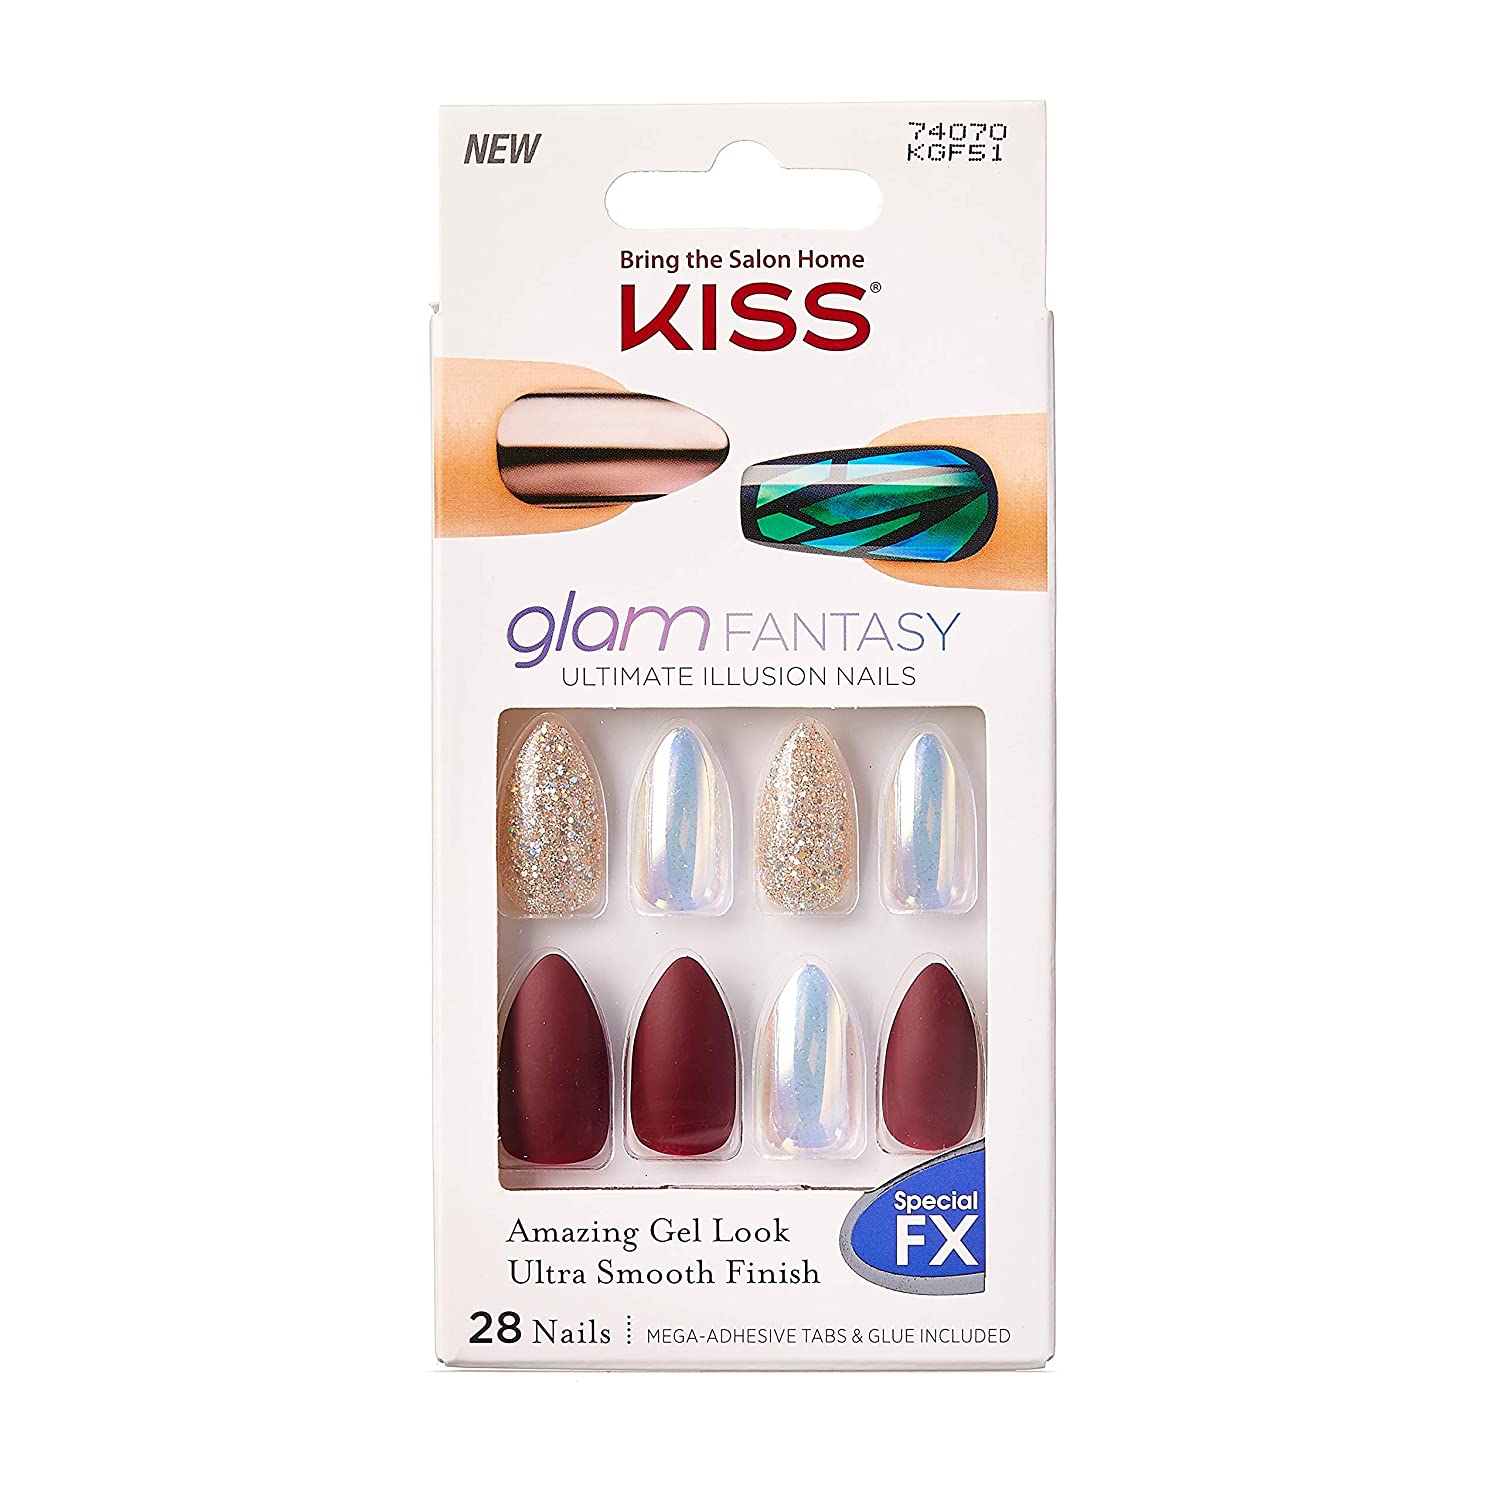 Kiss Glam Fantasy Special FX Nails – KGF51 (Red & Glitter Long Stilett